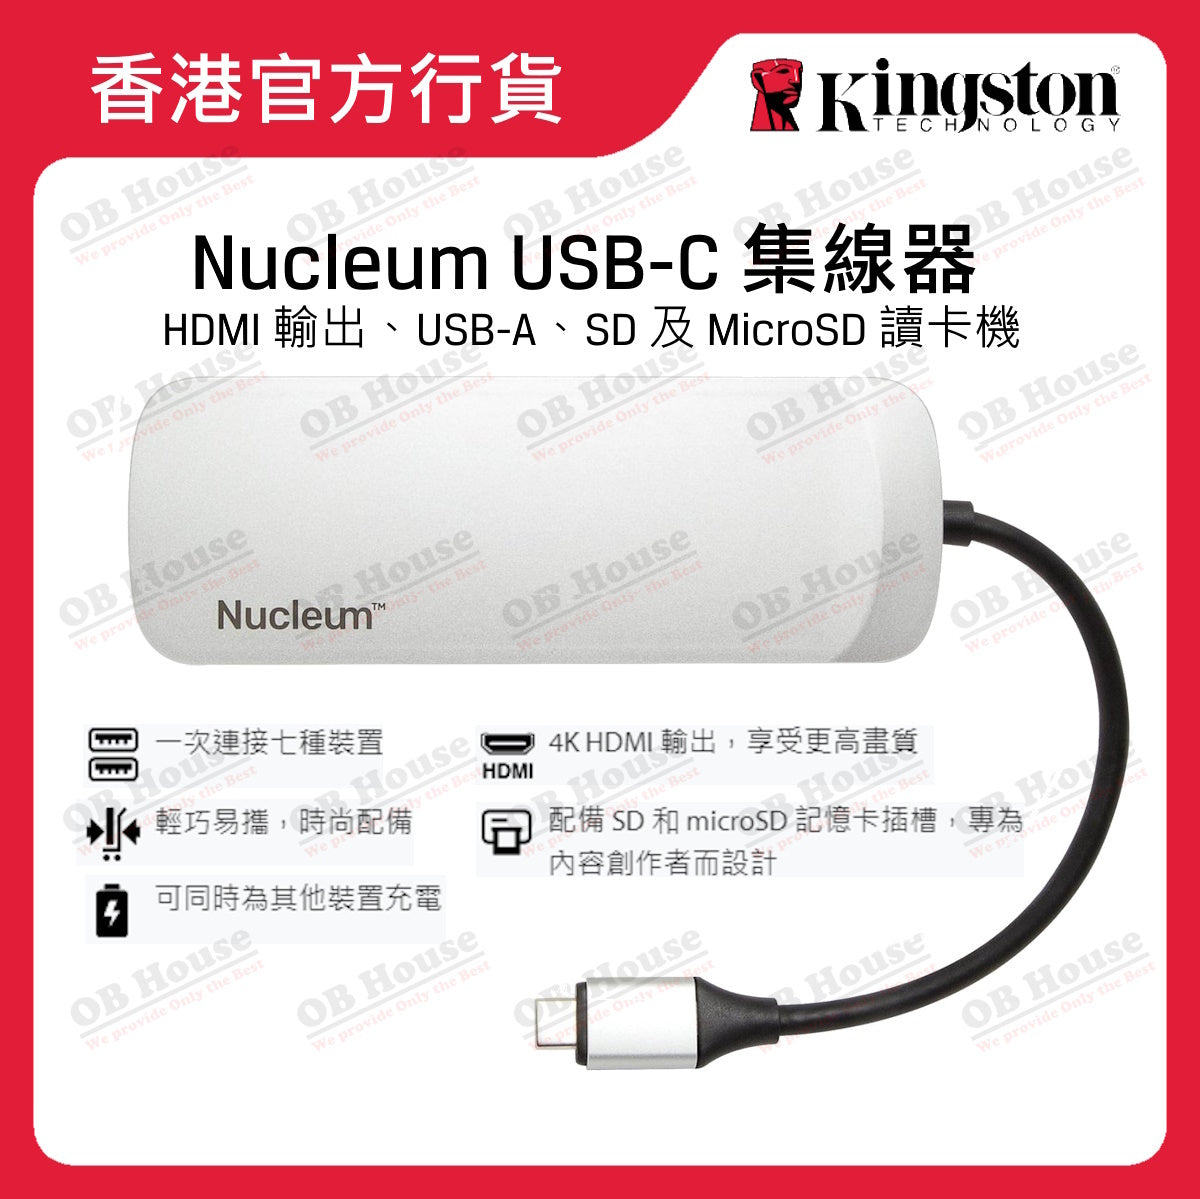 Nucleum 7-in-1 USB-C 集線器 (C-HUBC1-SR-EN)